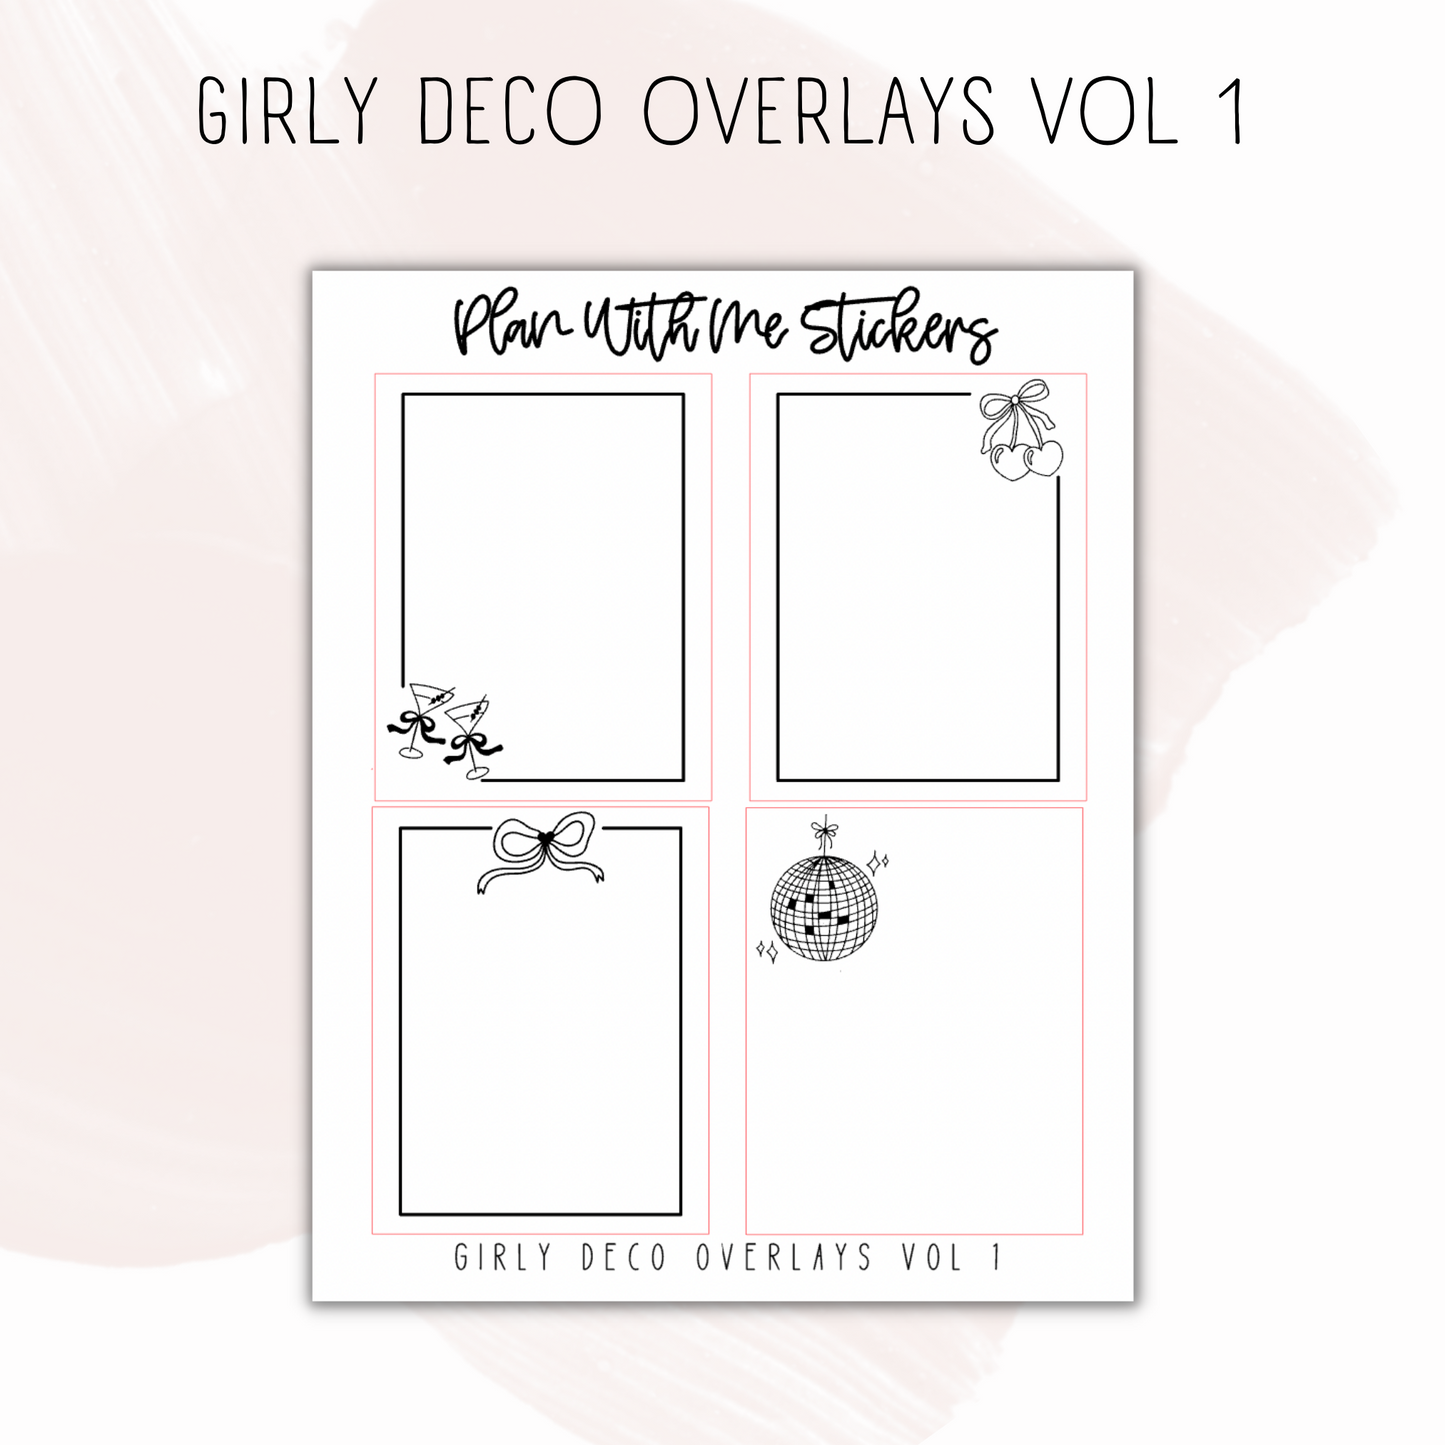 Girly Deco Overlays Vol 1